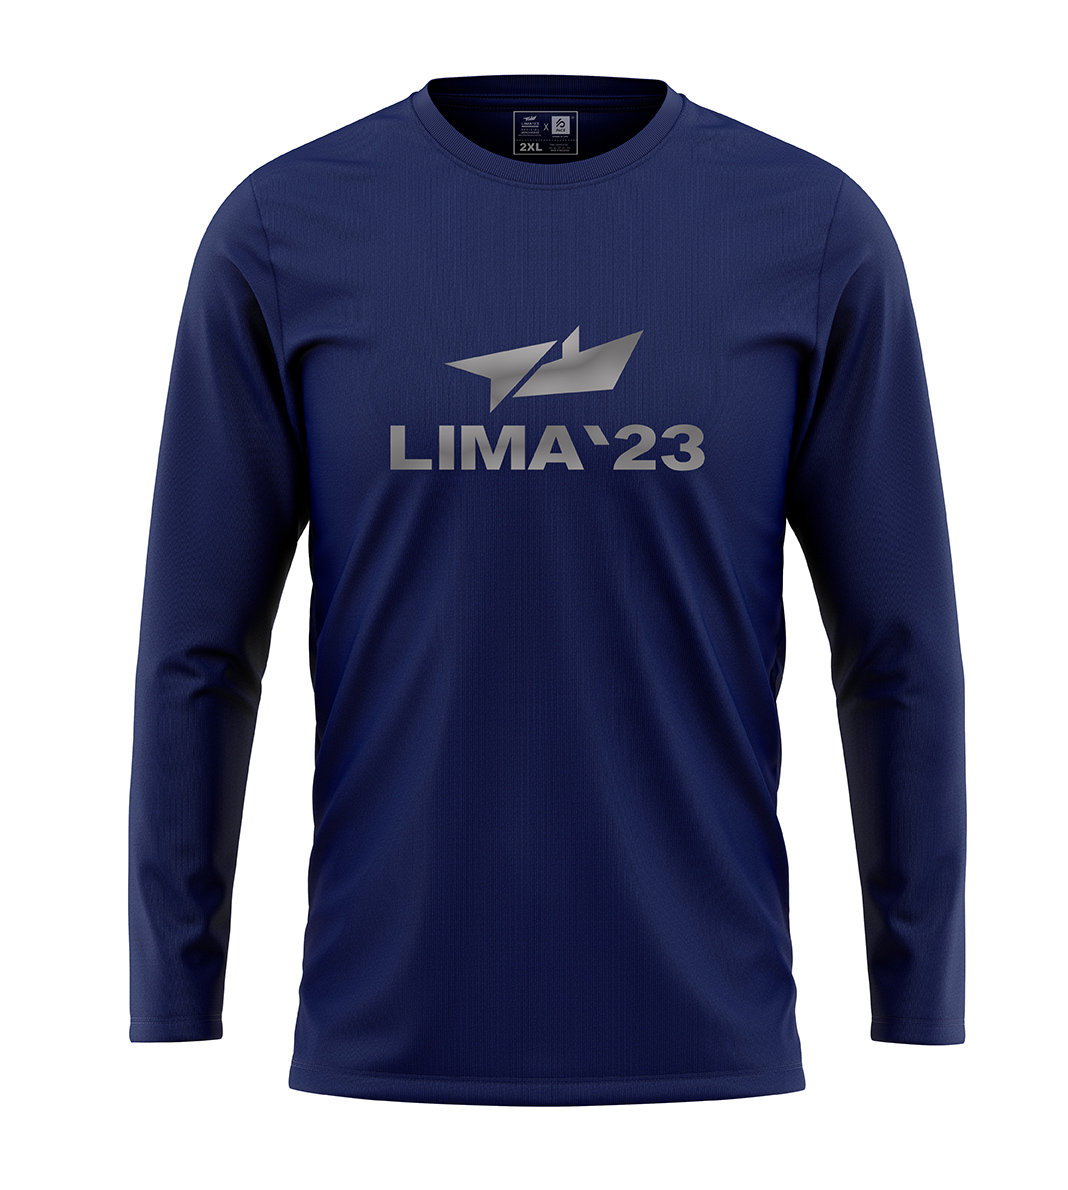 LIMA23 Long Sleeve Tee Shirt 